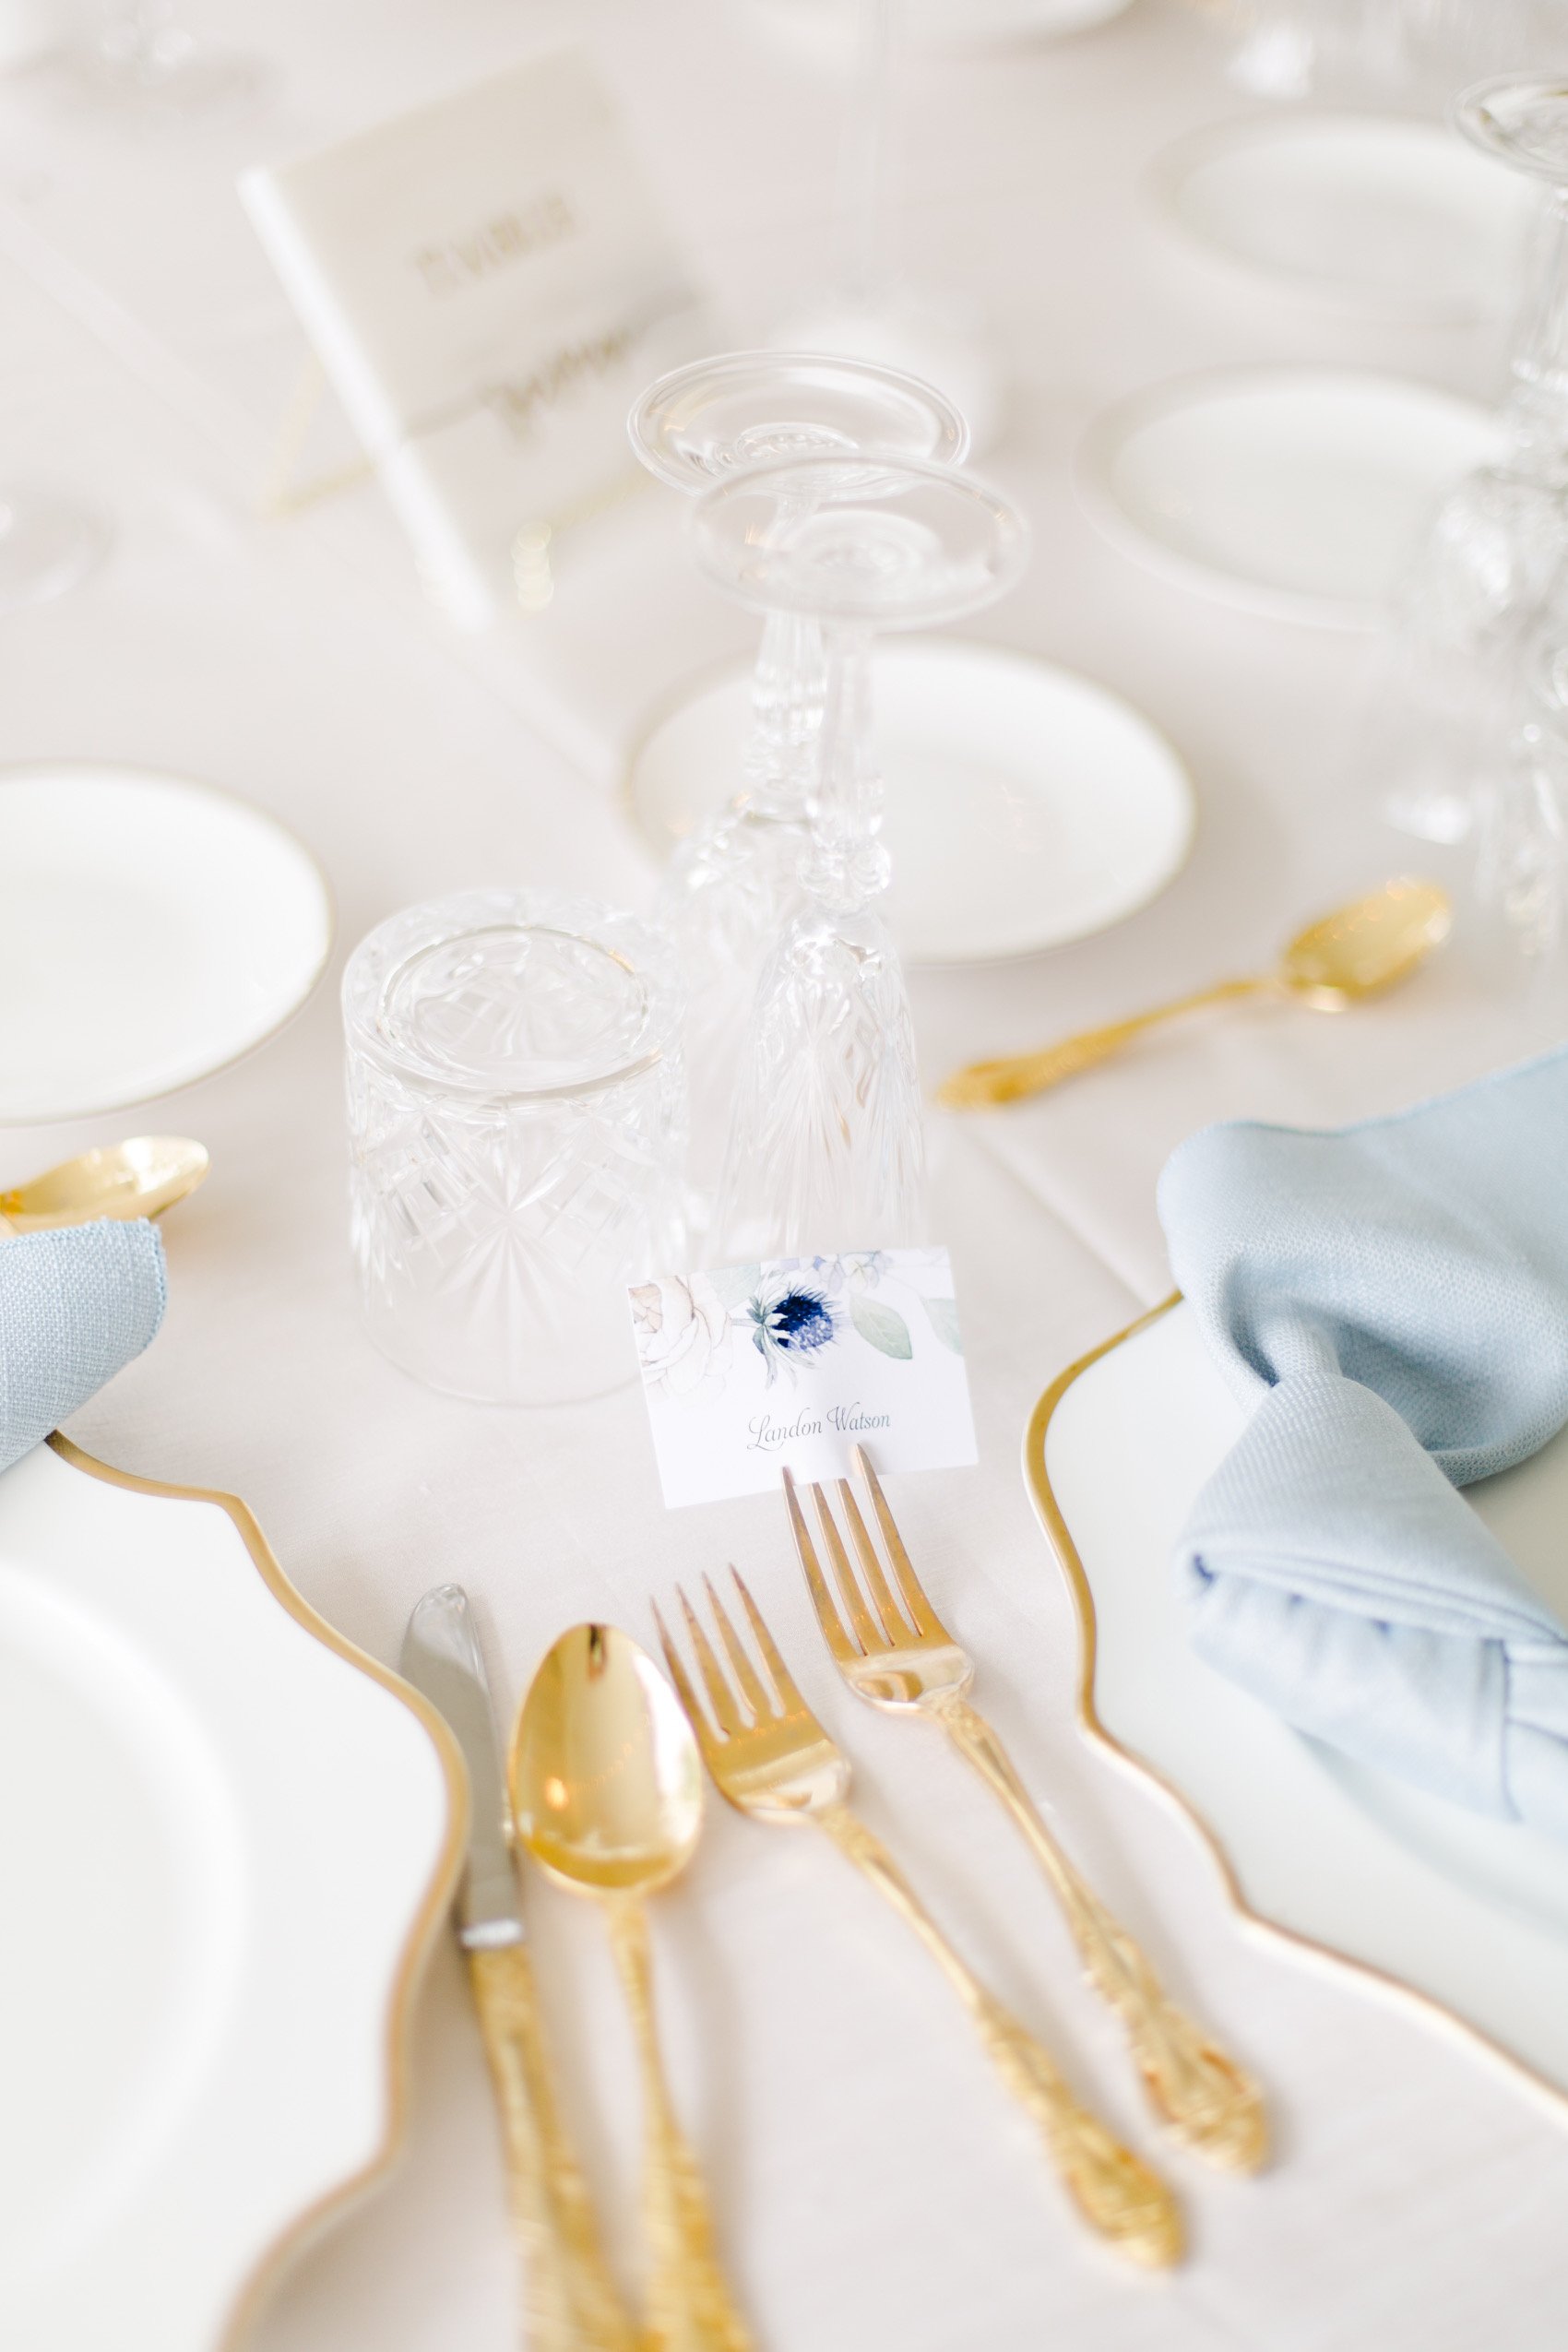 Blue florals with Hydrangea, anemone &amp; Thistle Wedding Invitations